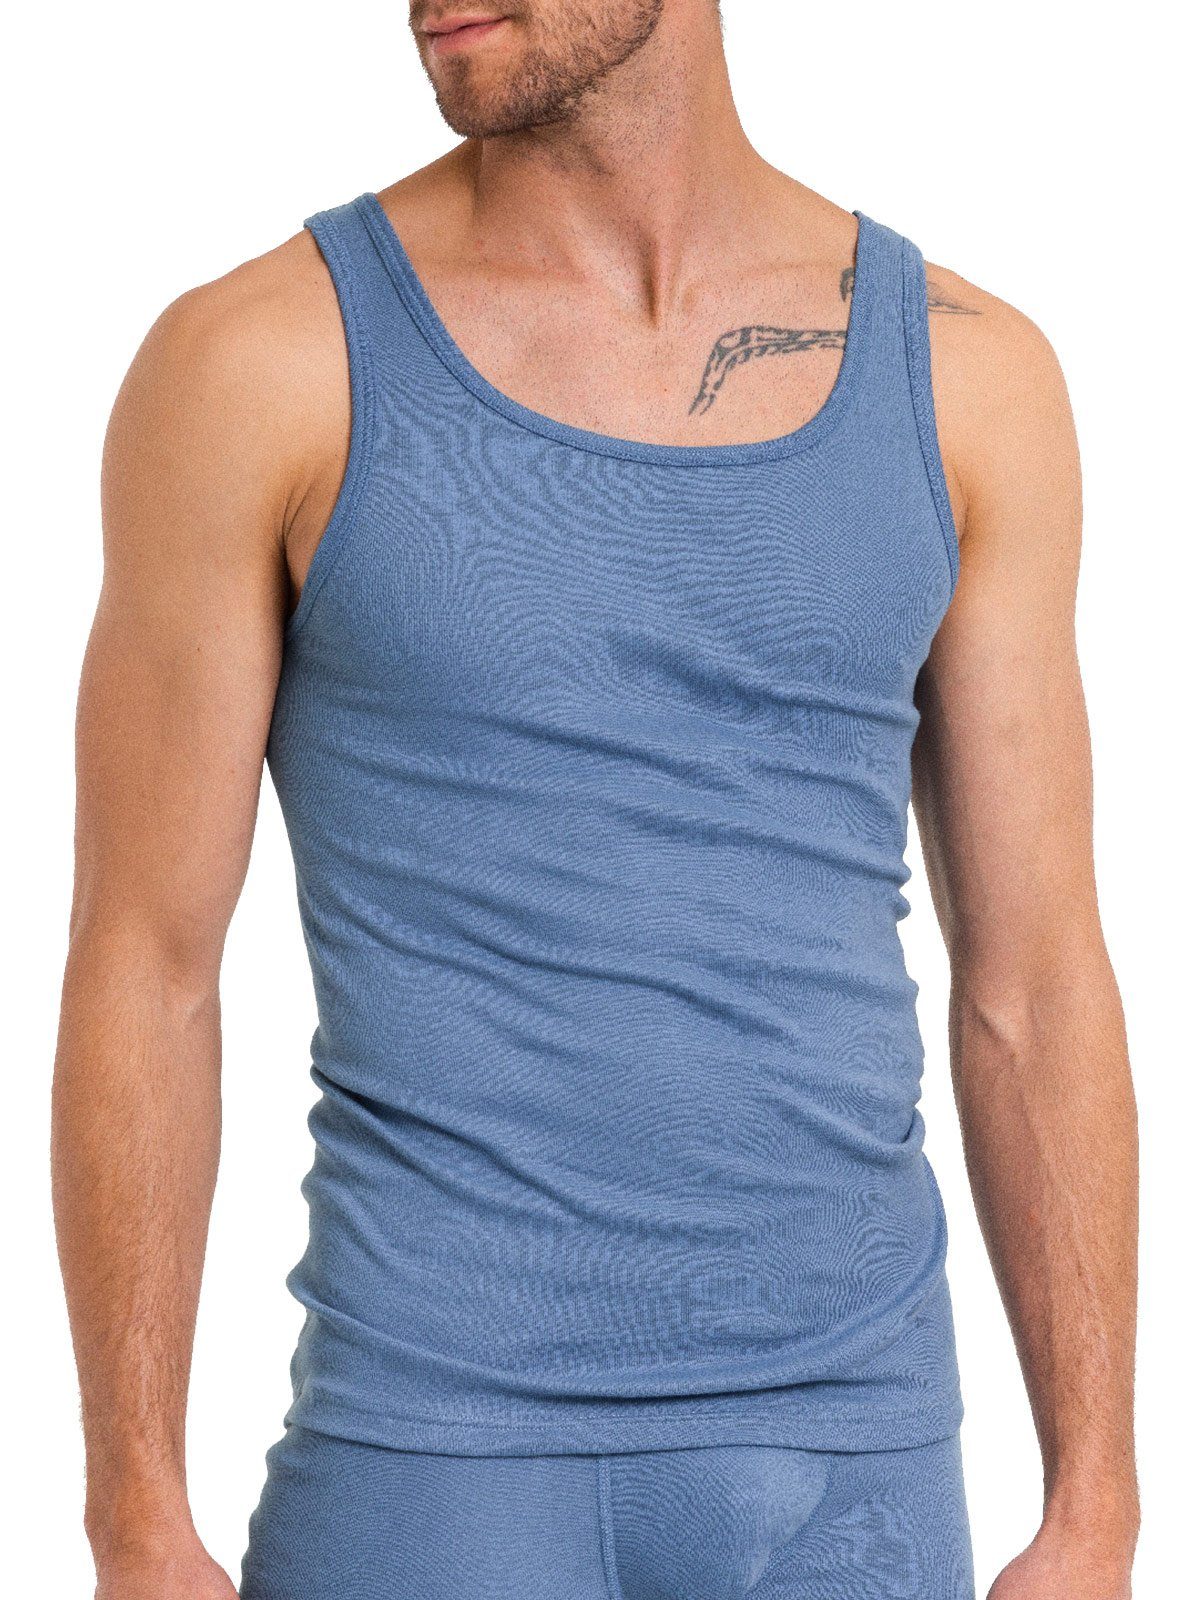 KUMPF Achselhemd Herren Unterhemd 2er Pack Bio Cotton (Packung, 2-St) hohe Markenqualität | Ärmellose Unterhemden